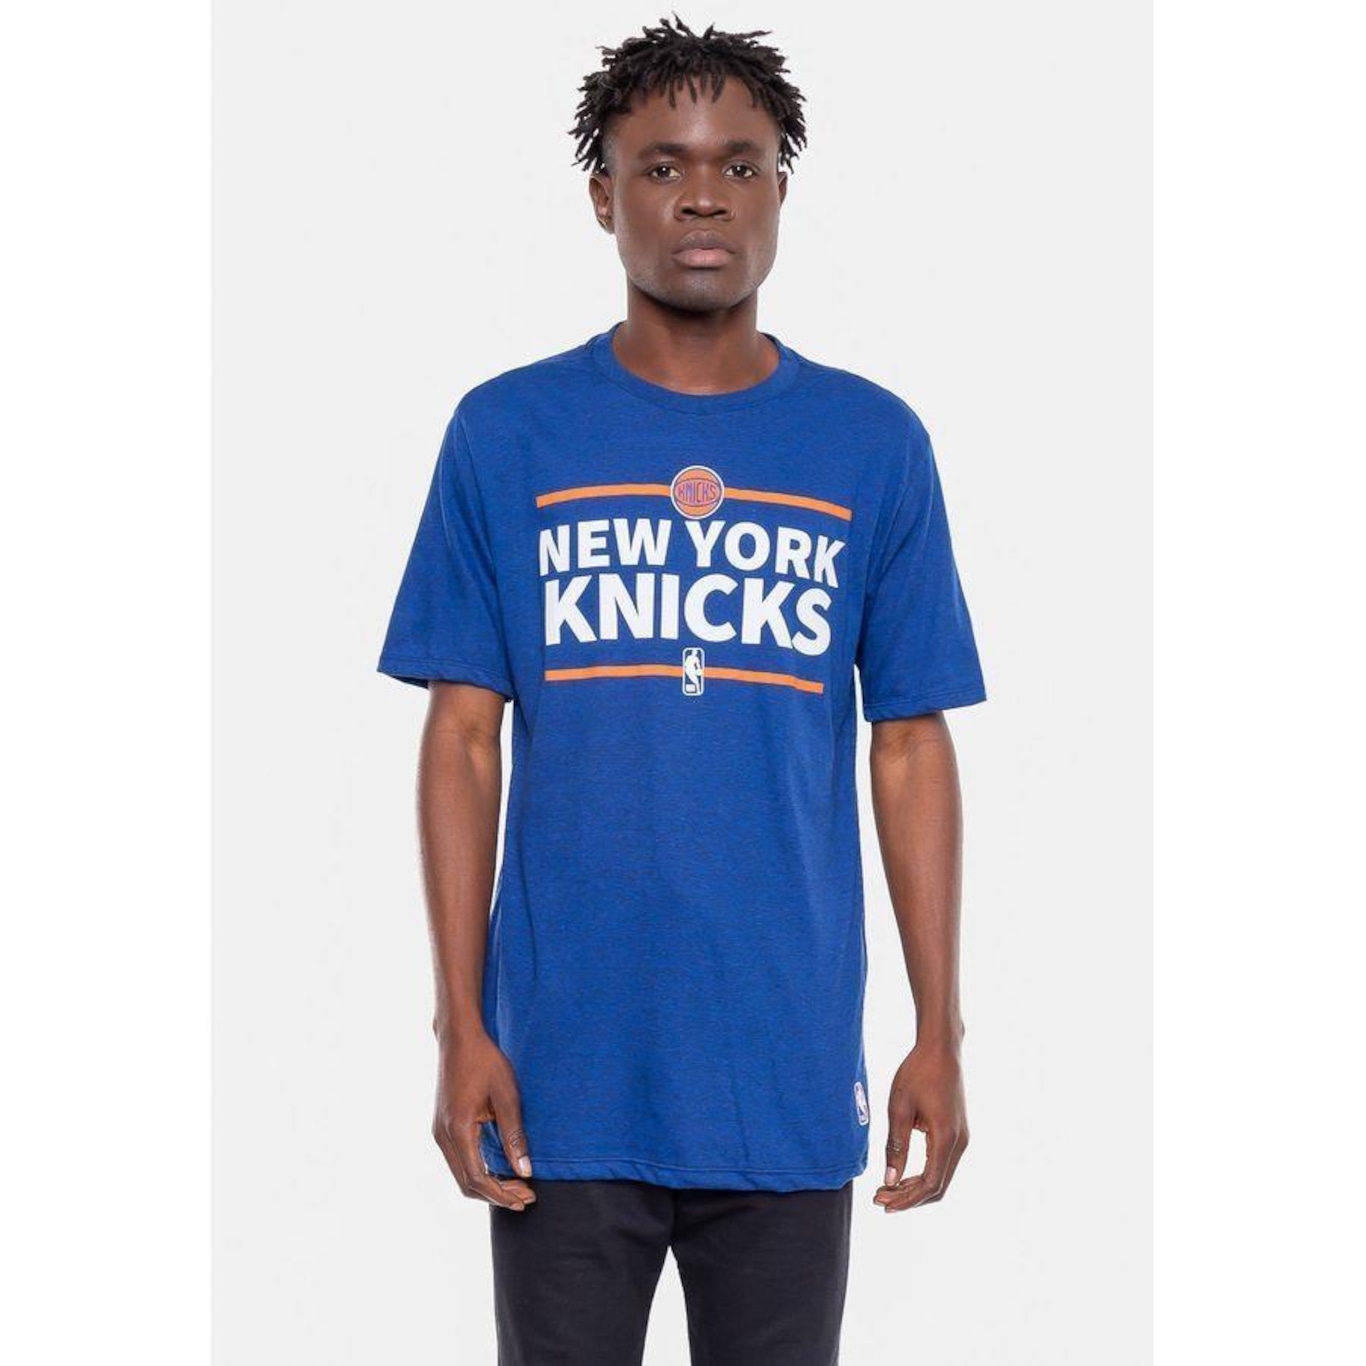 Camiseta Nba Mouline New York Knicks Nba - Masculina em Promoção